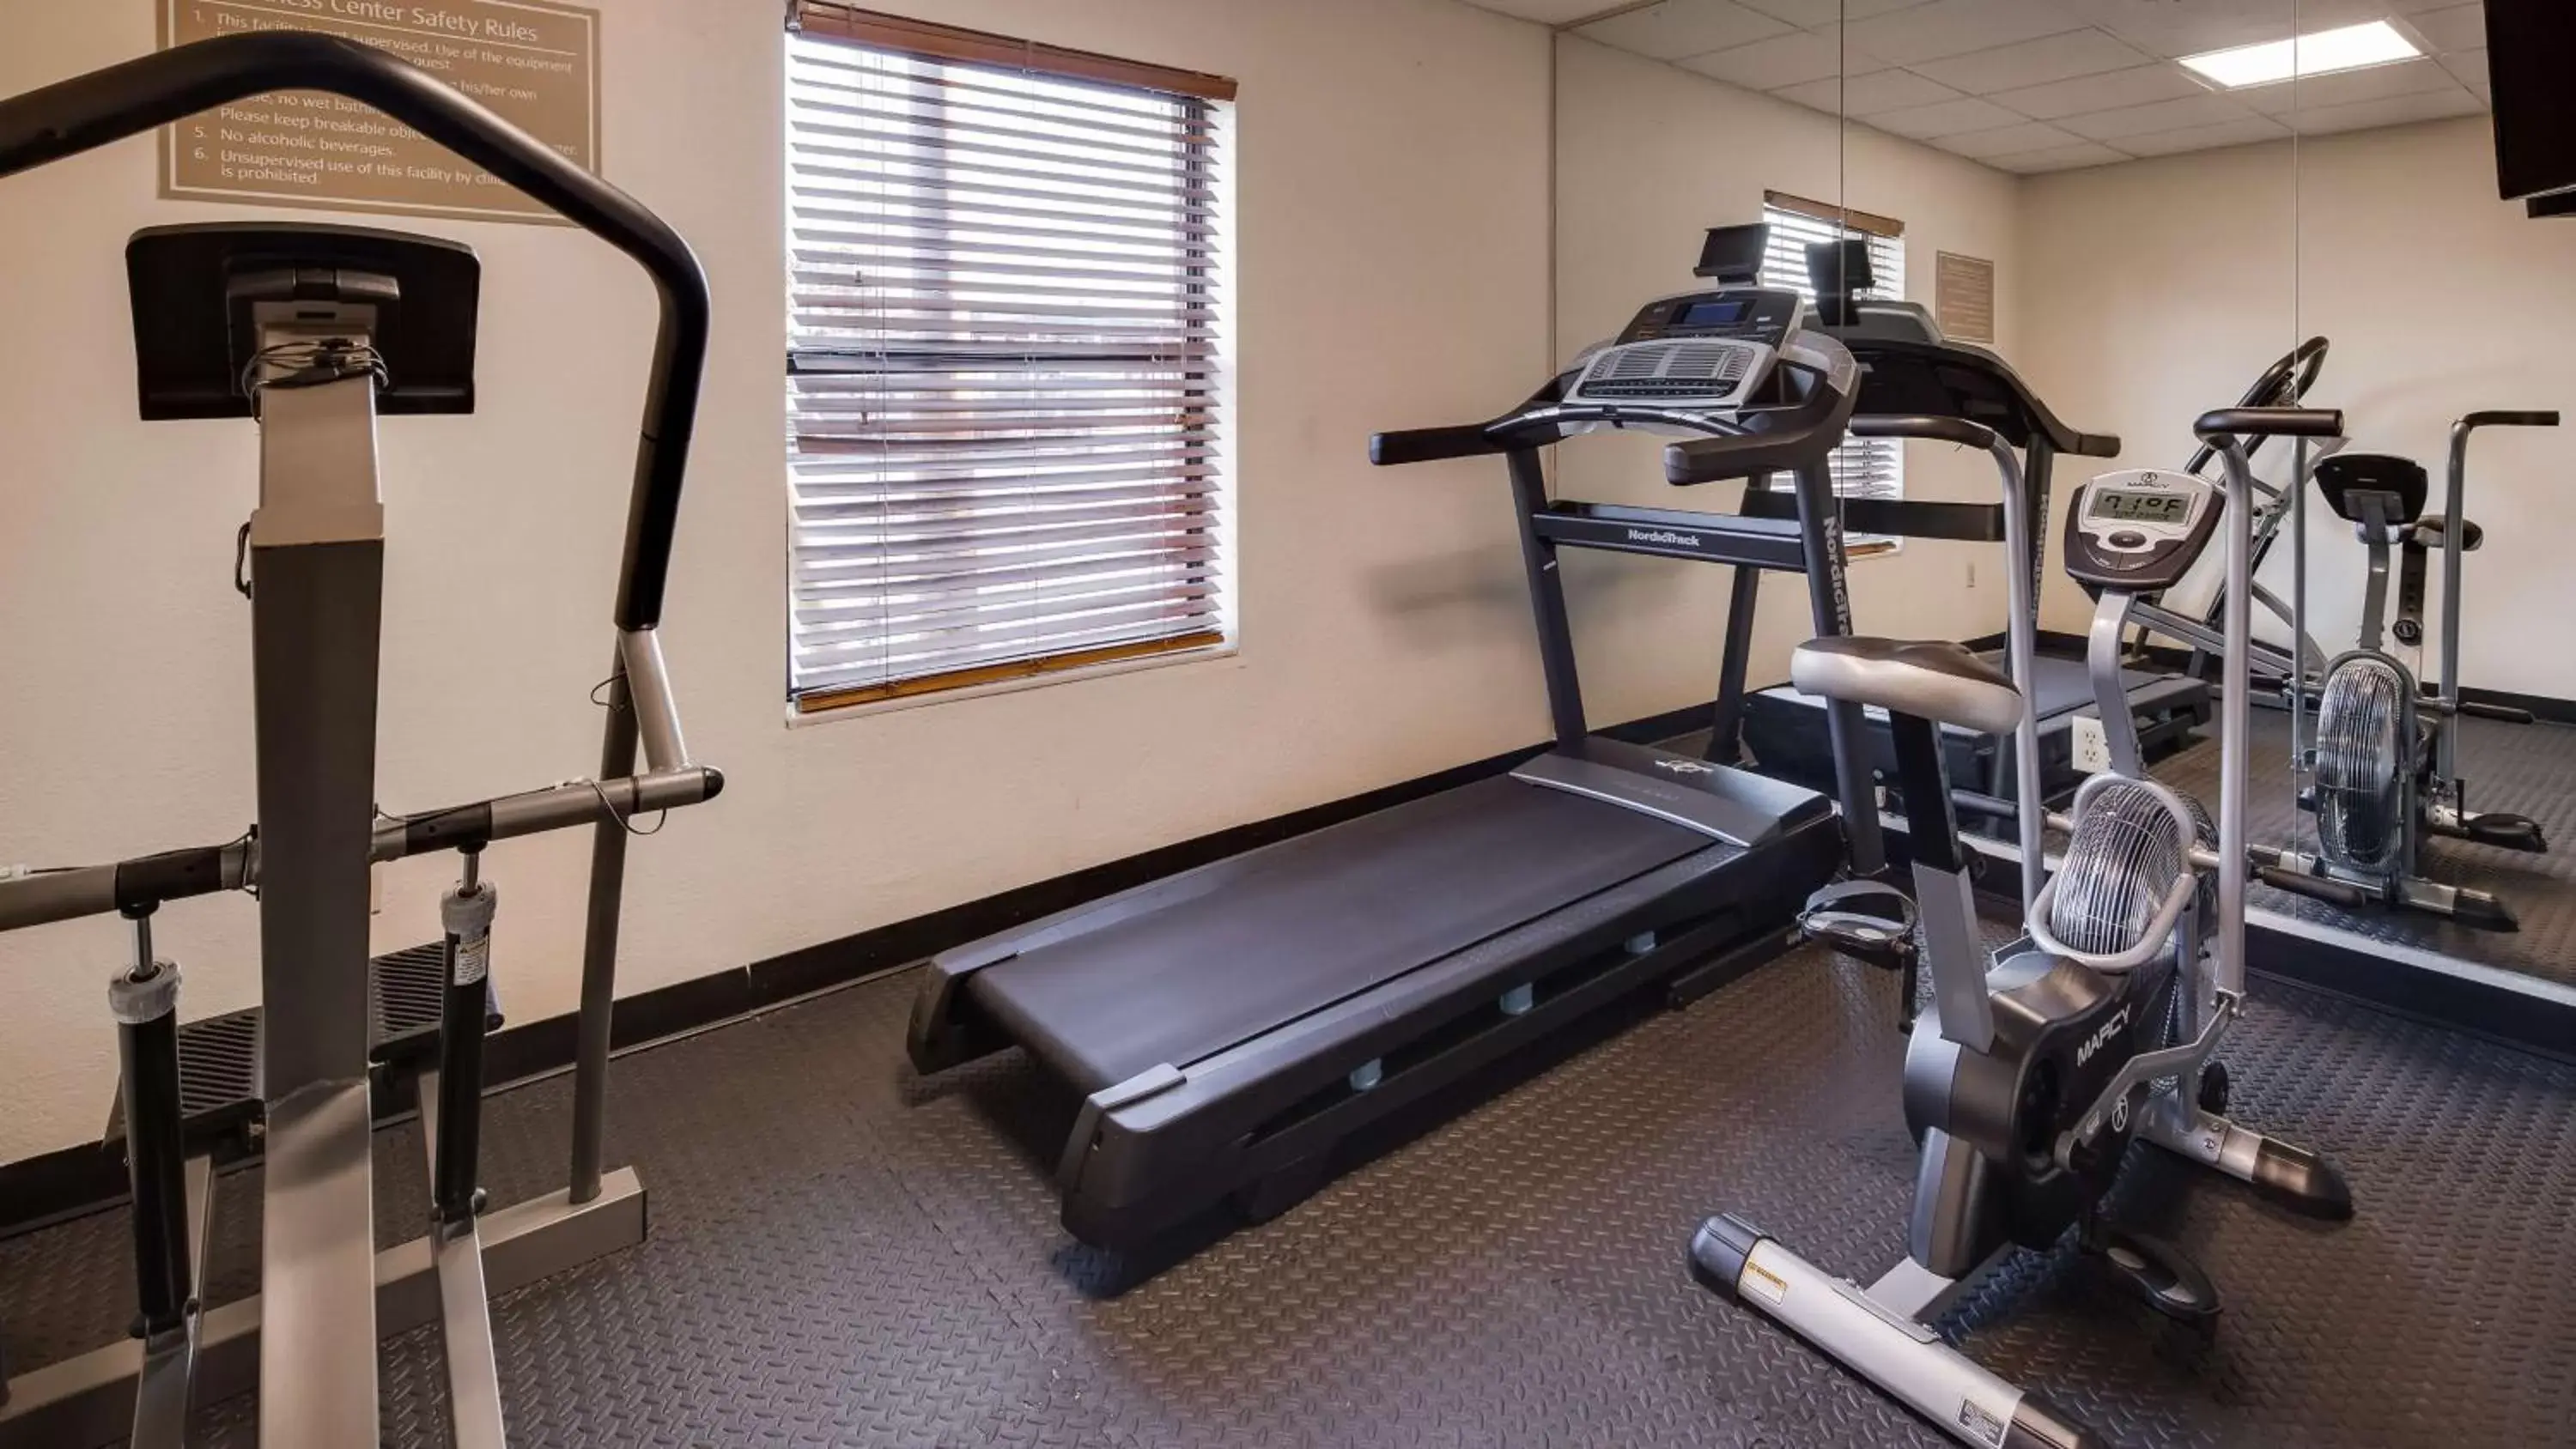 Fitness centre/facilities, Fitness Center/Facilities in Best Western Rayne Inn